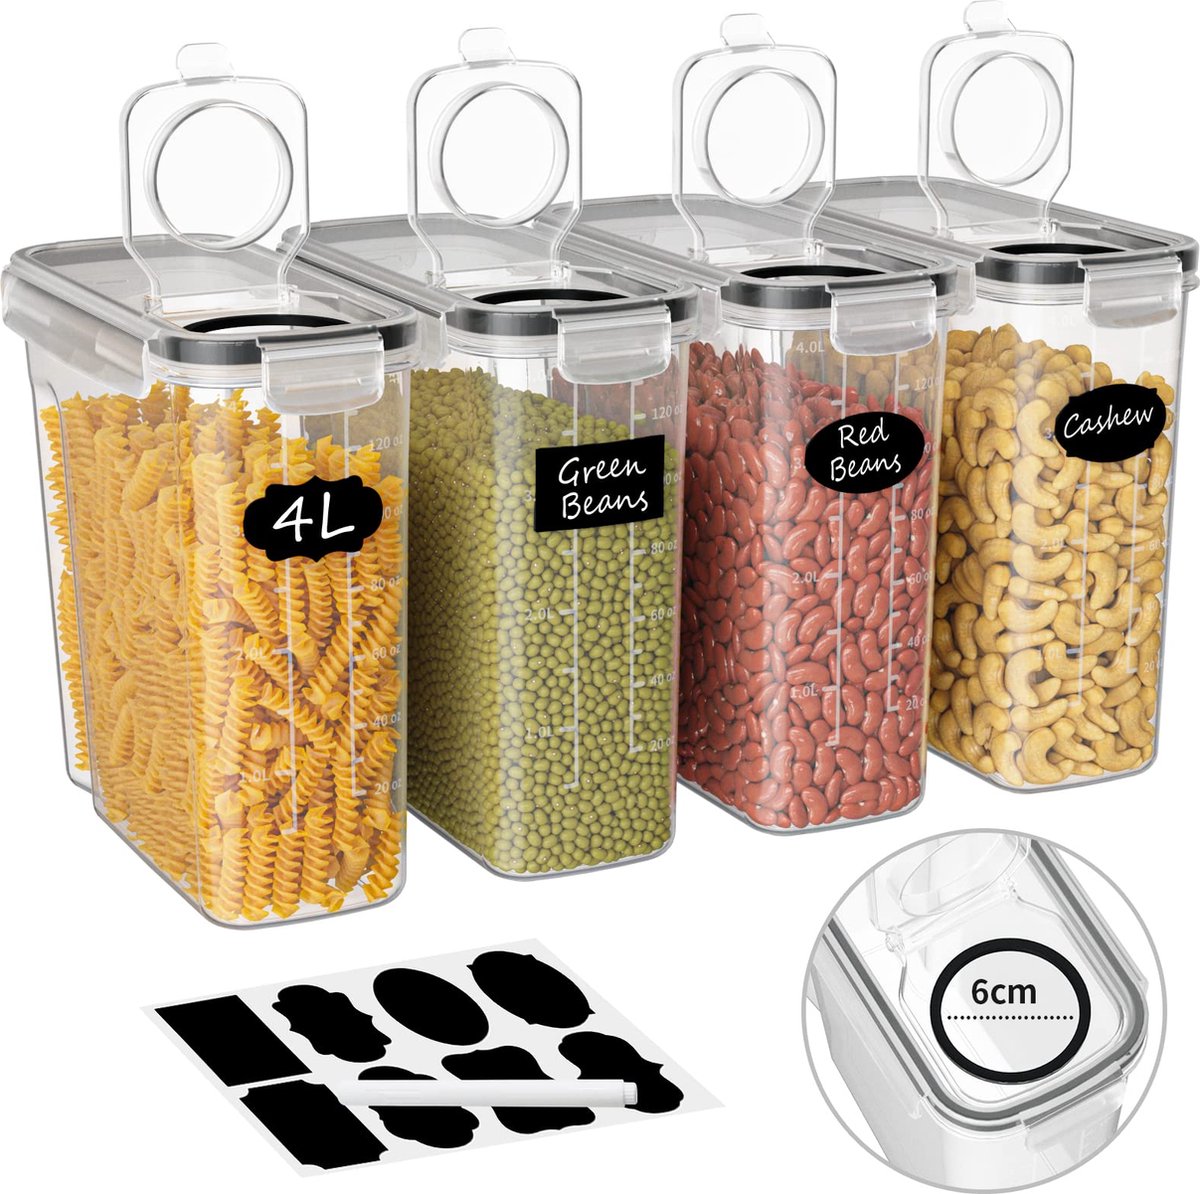 Luchtdichte voedselcontainers, 4 stuks 4 Liter kunststof container met deksel, voedselcontainer voor granen, muesli, meel, cornflakes